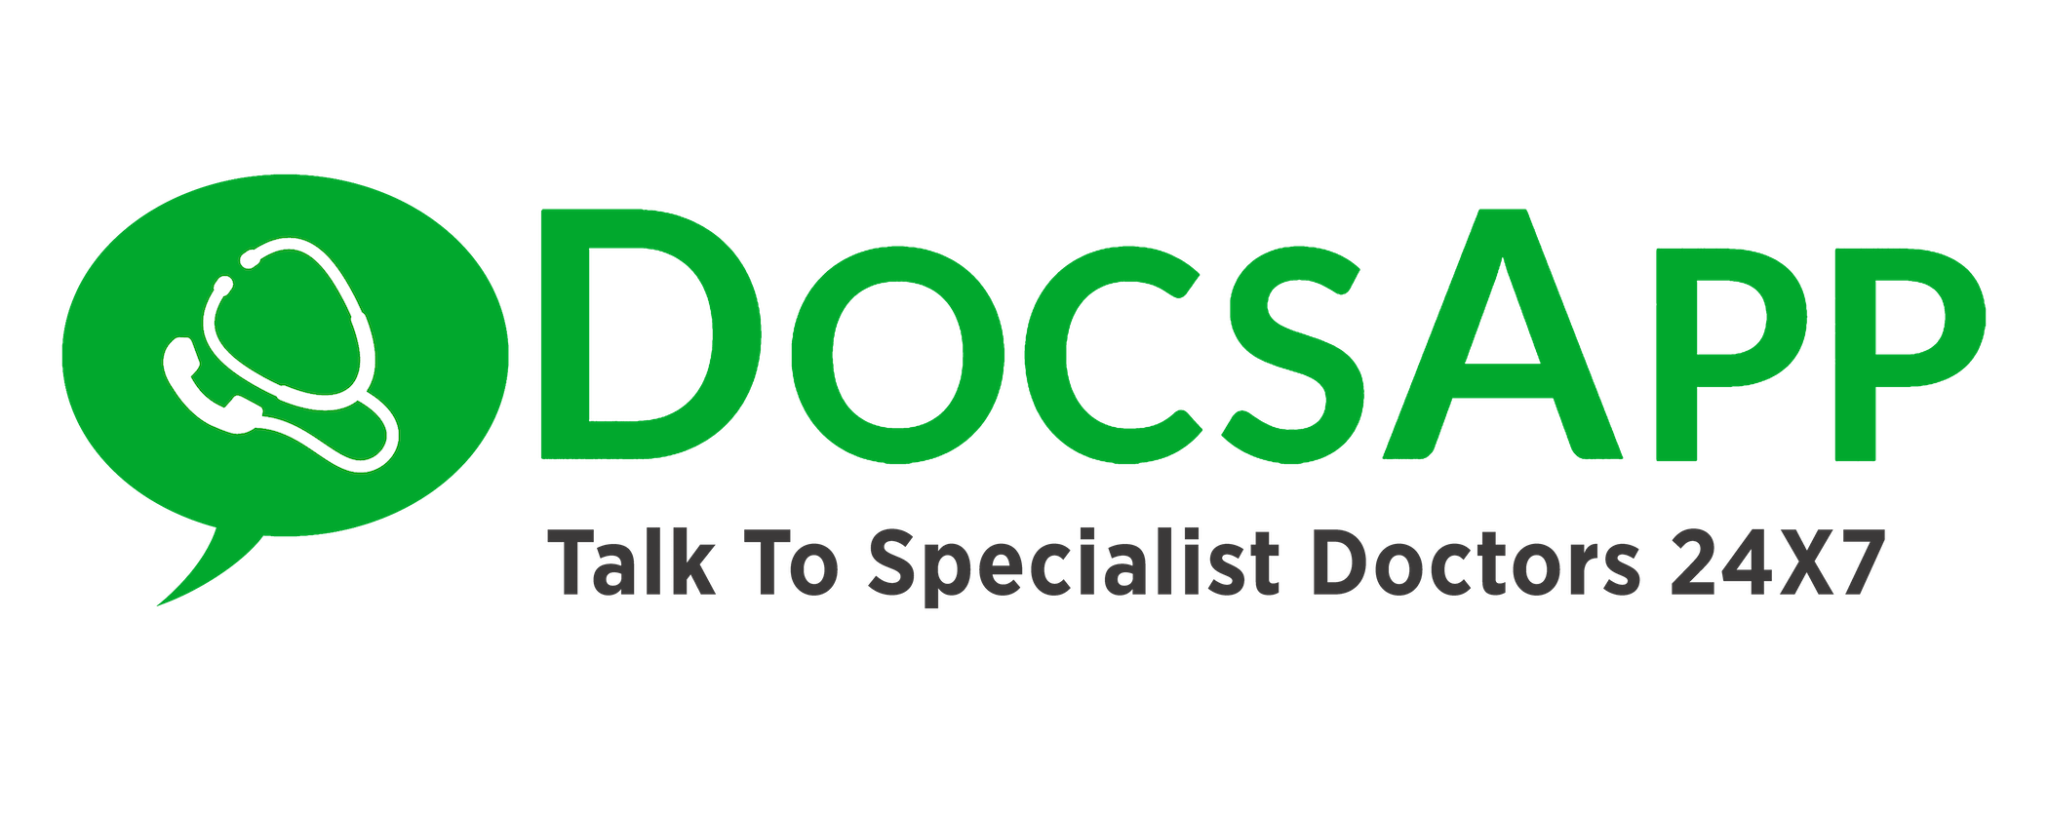 online-doctor-consultation-platform-launches-docsapp-tv